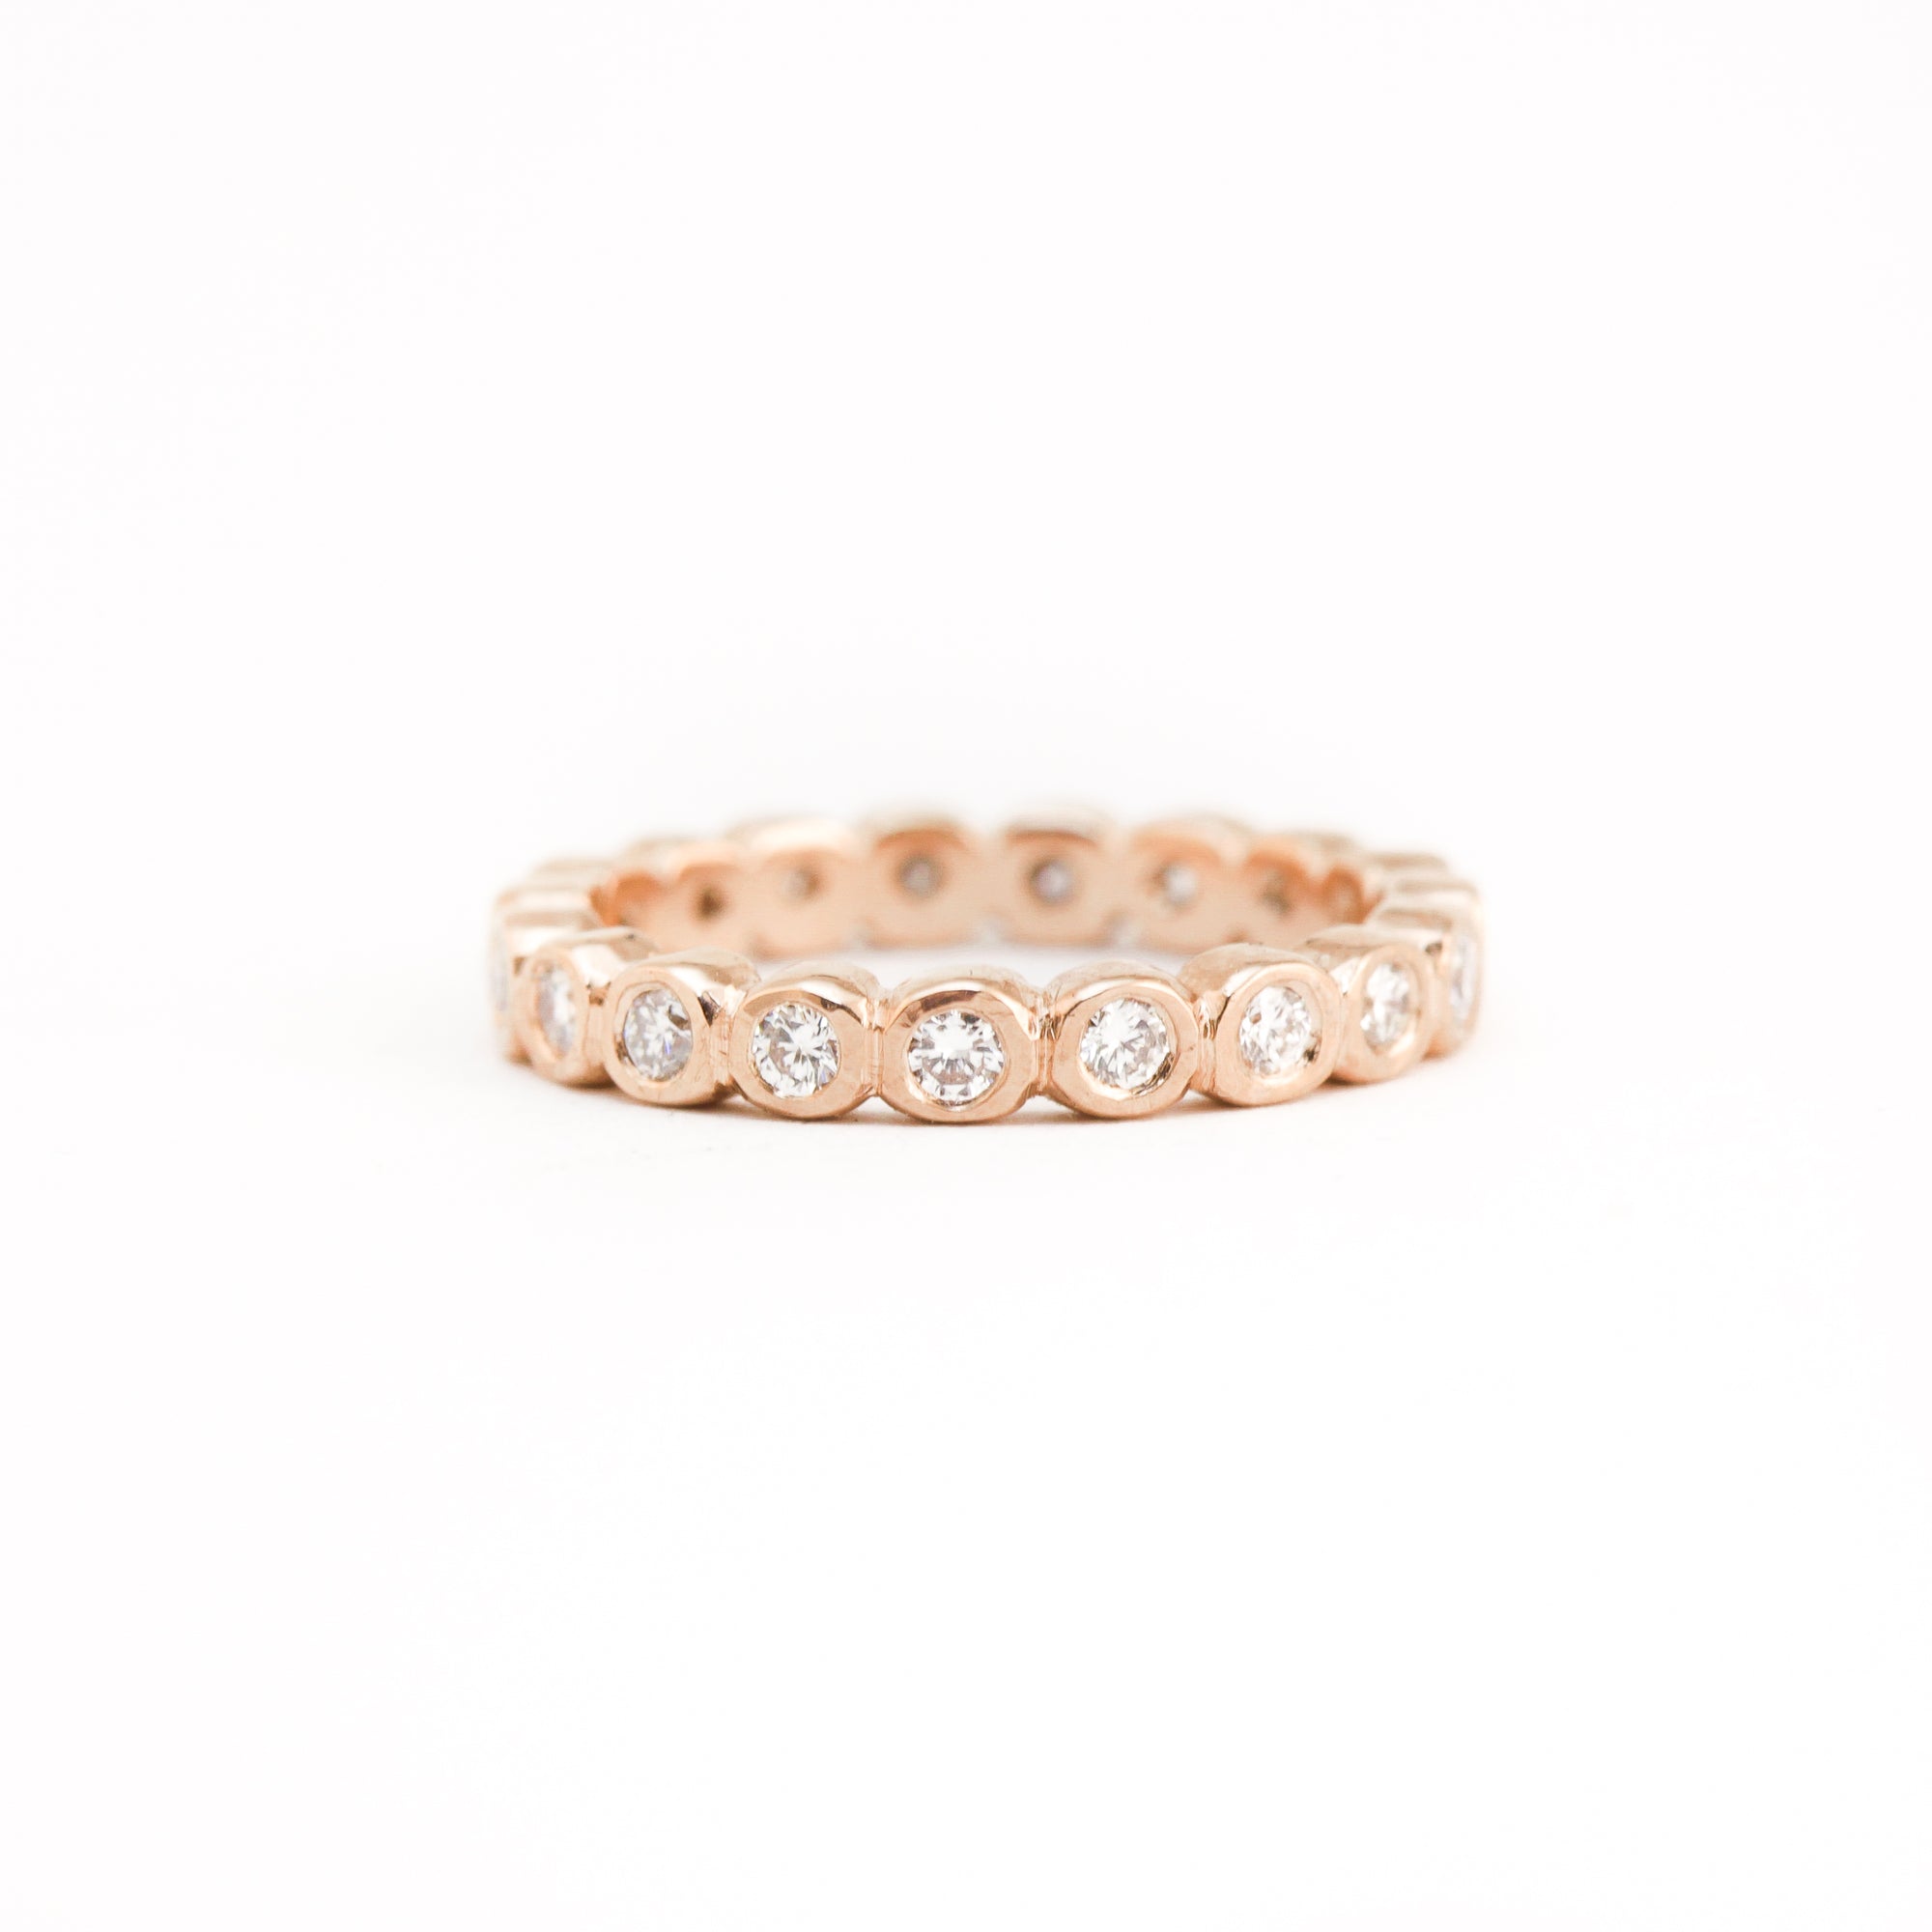 Bespoke 18 carat rose gold eternity ring, set with 23 round brilliant cut white diamonds.